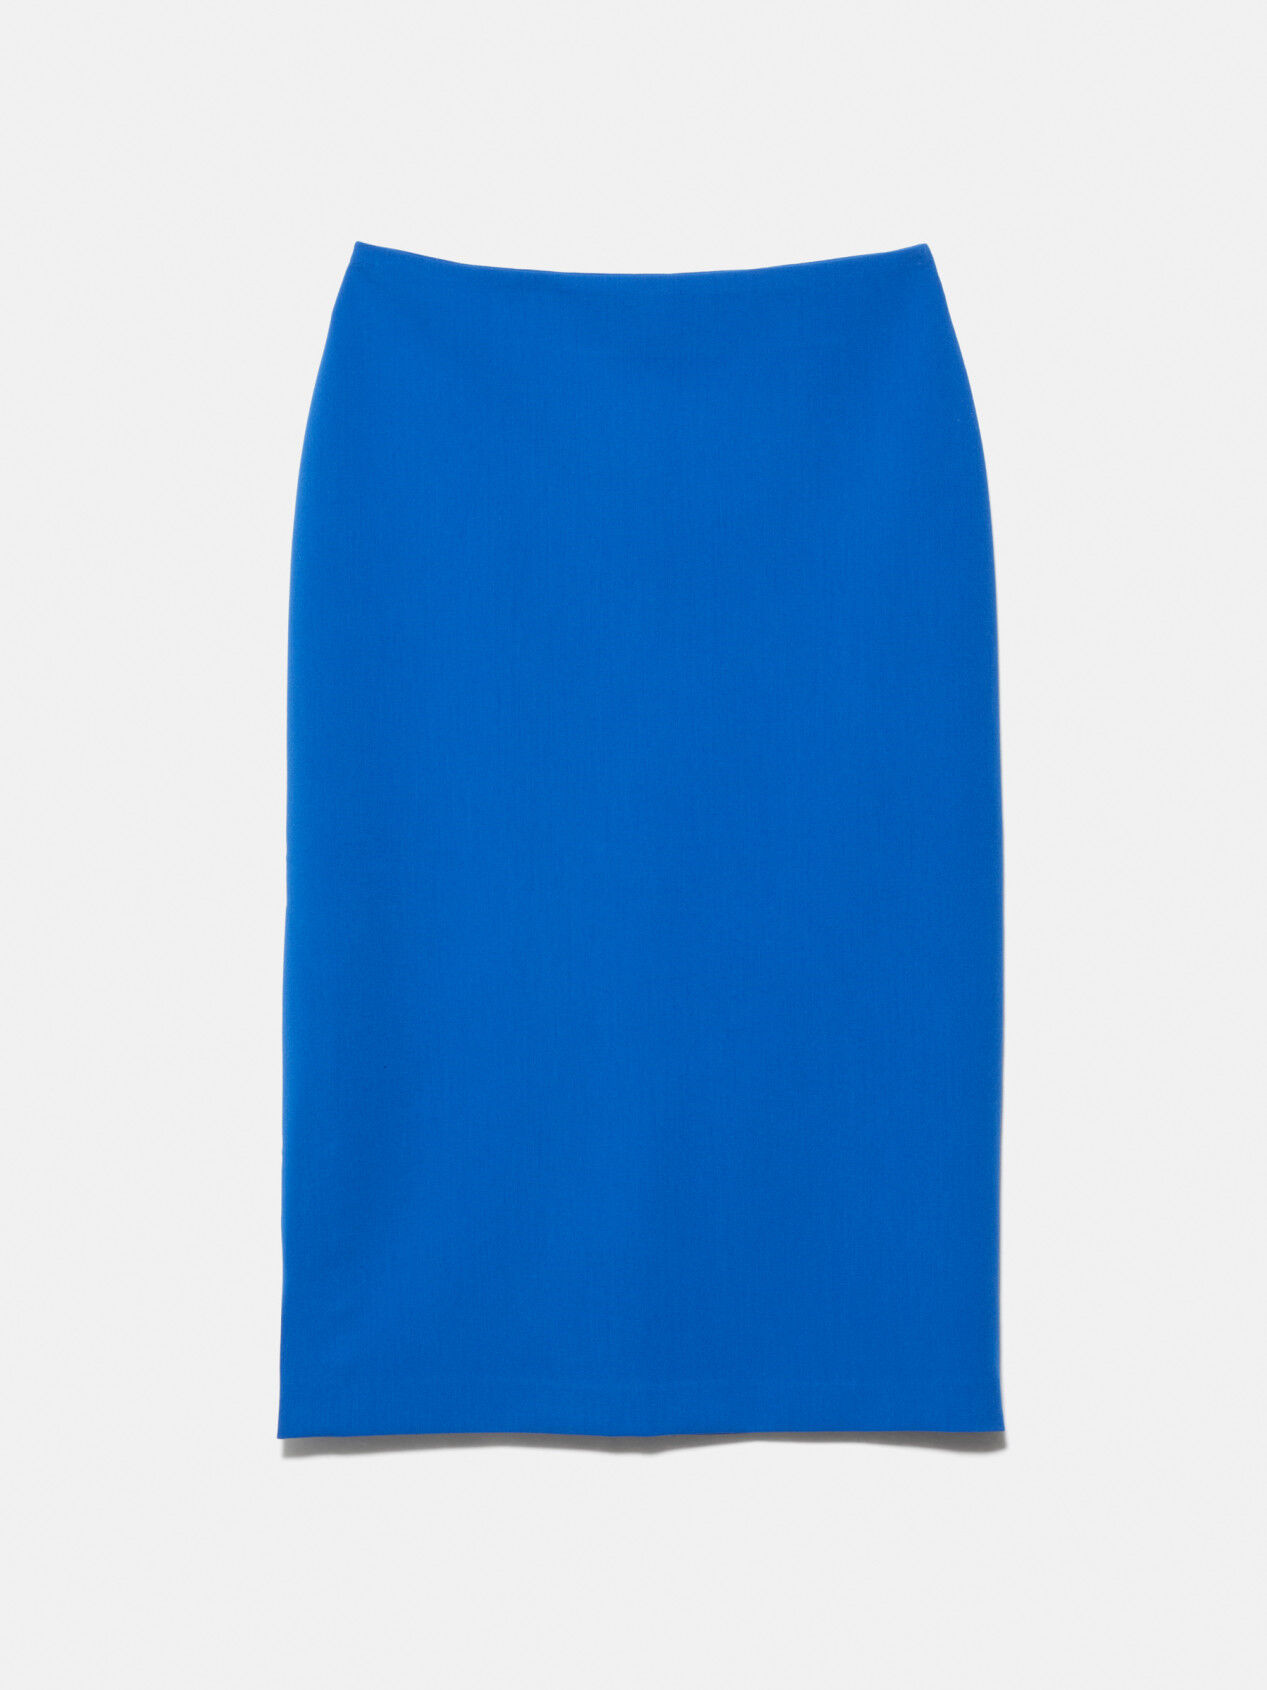 Pencil skirt with slit, Neon Sky Blue - Sisley